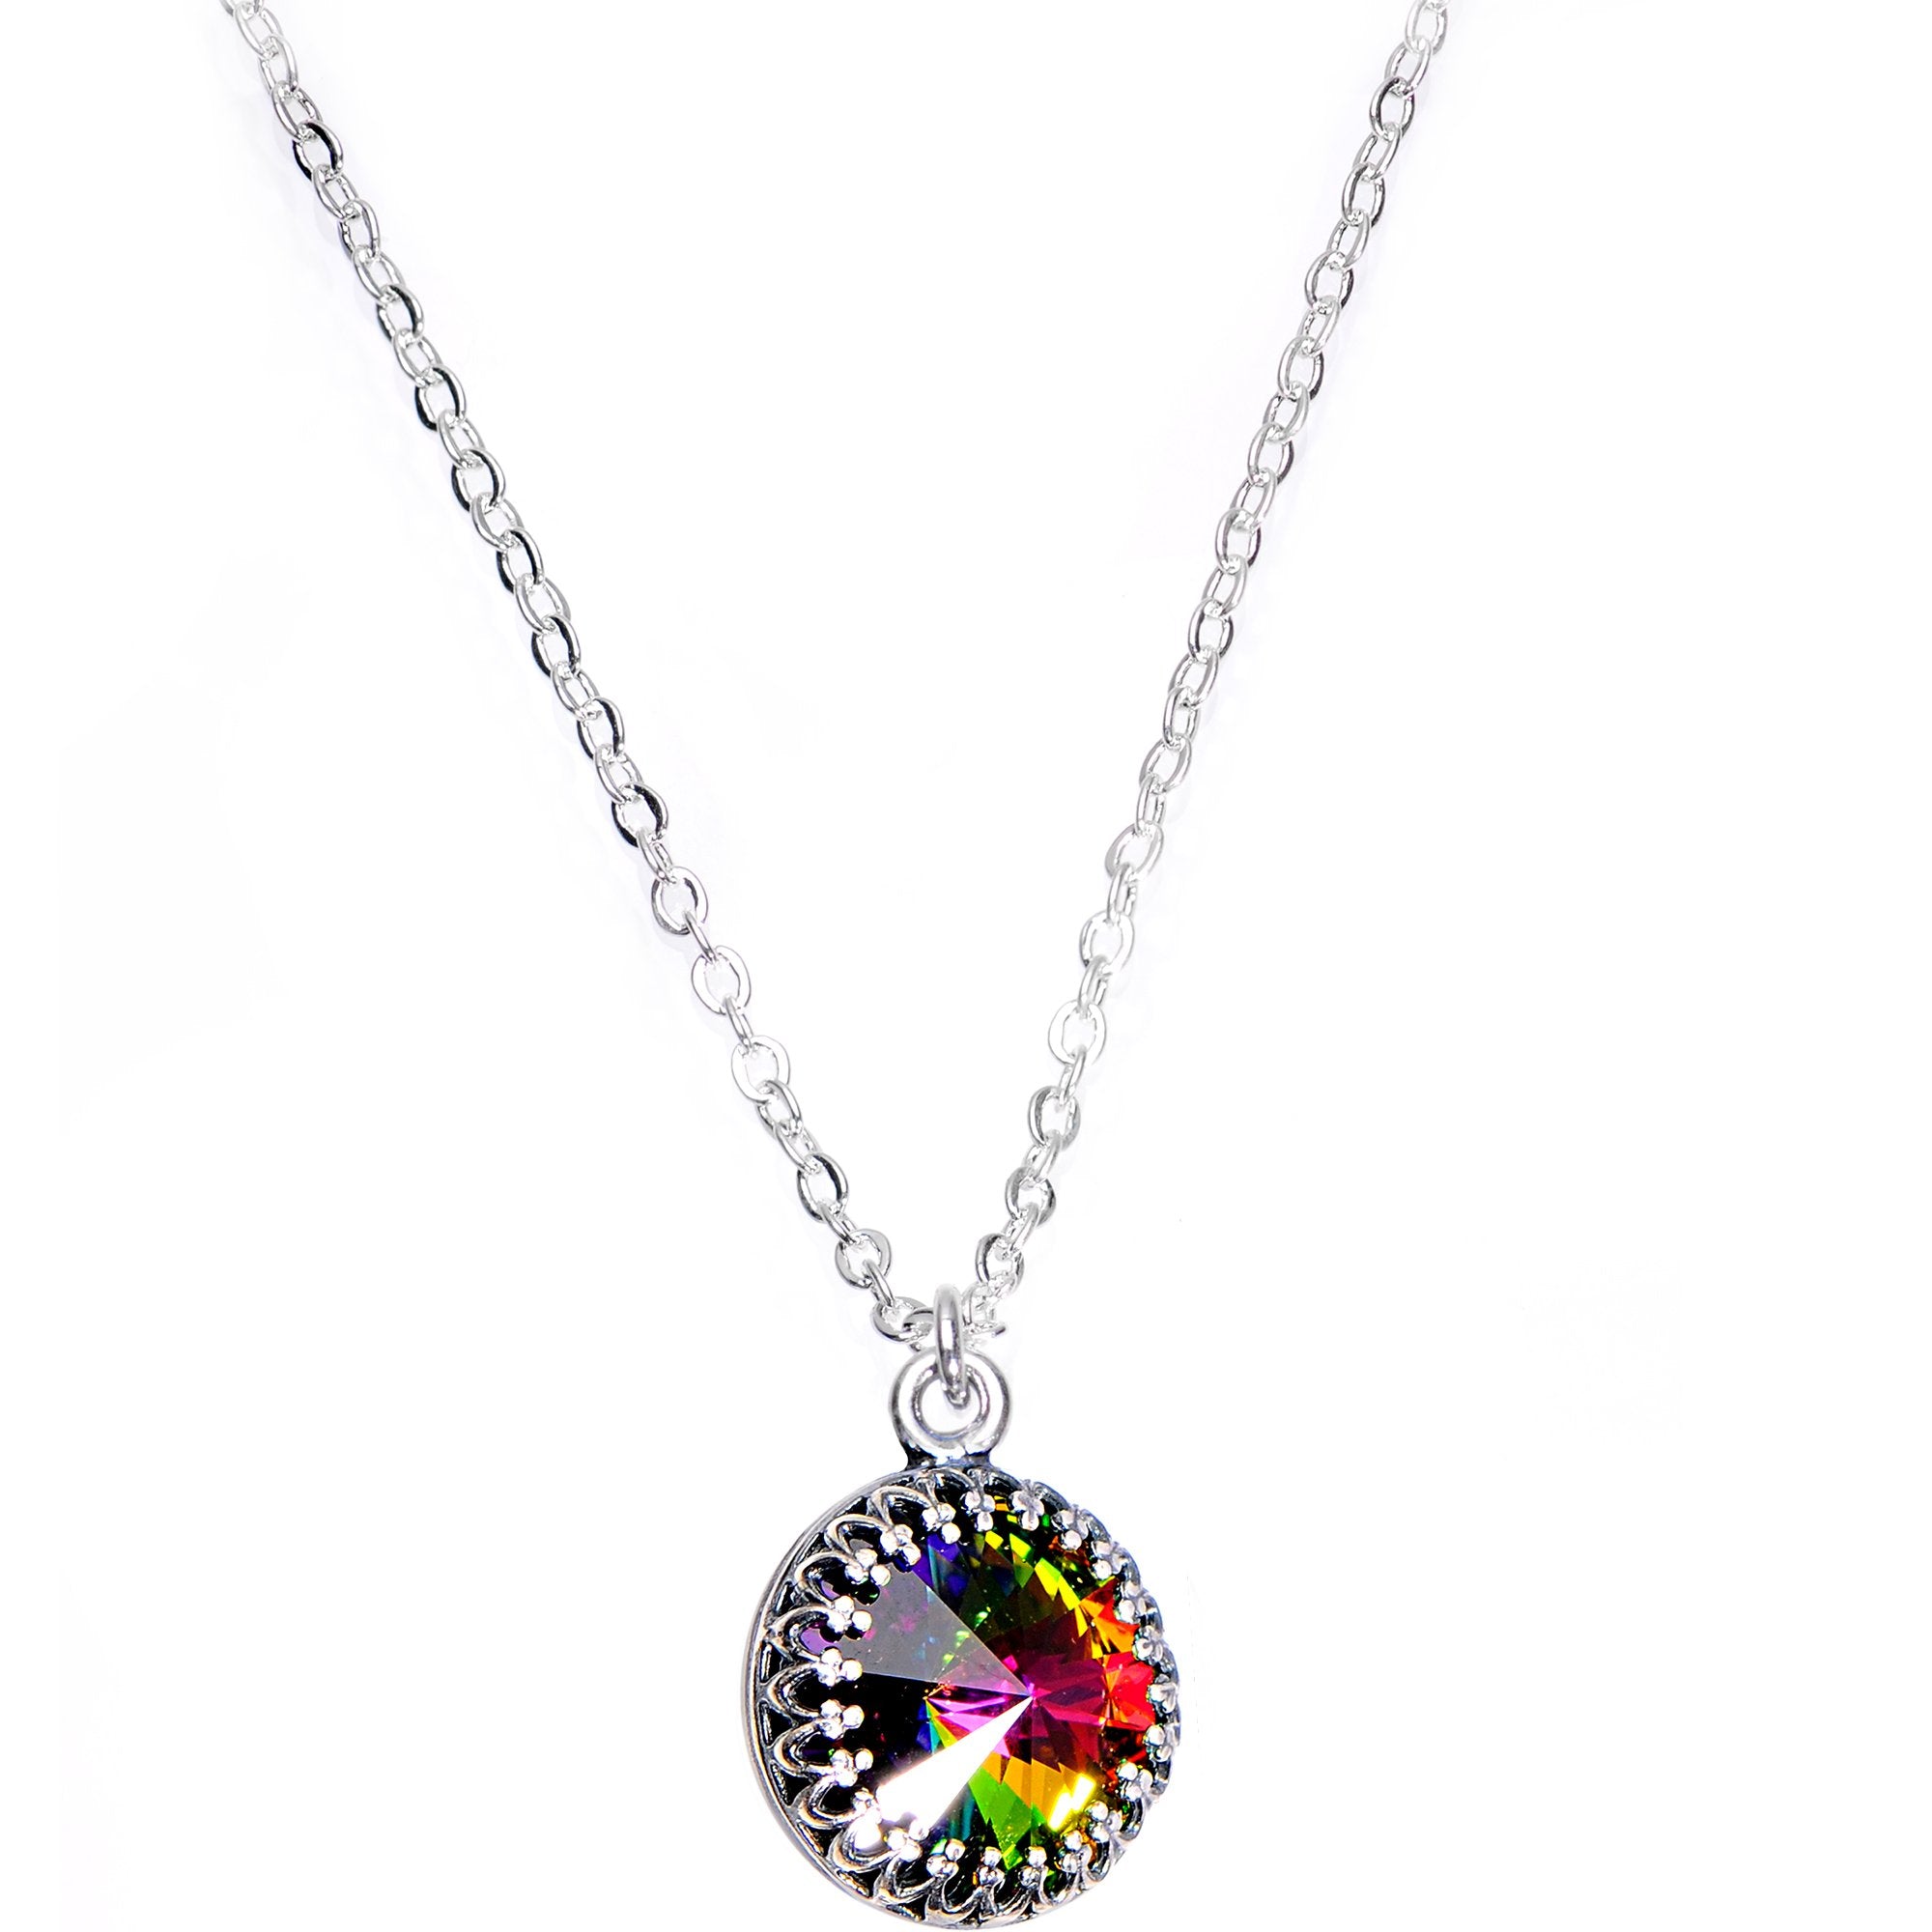 Handmade Rainbow Bombastic Necklace Created with Crystals